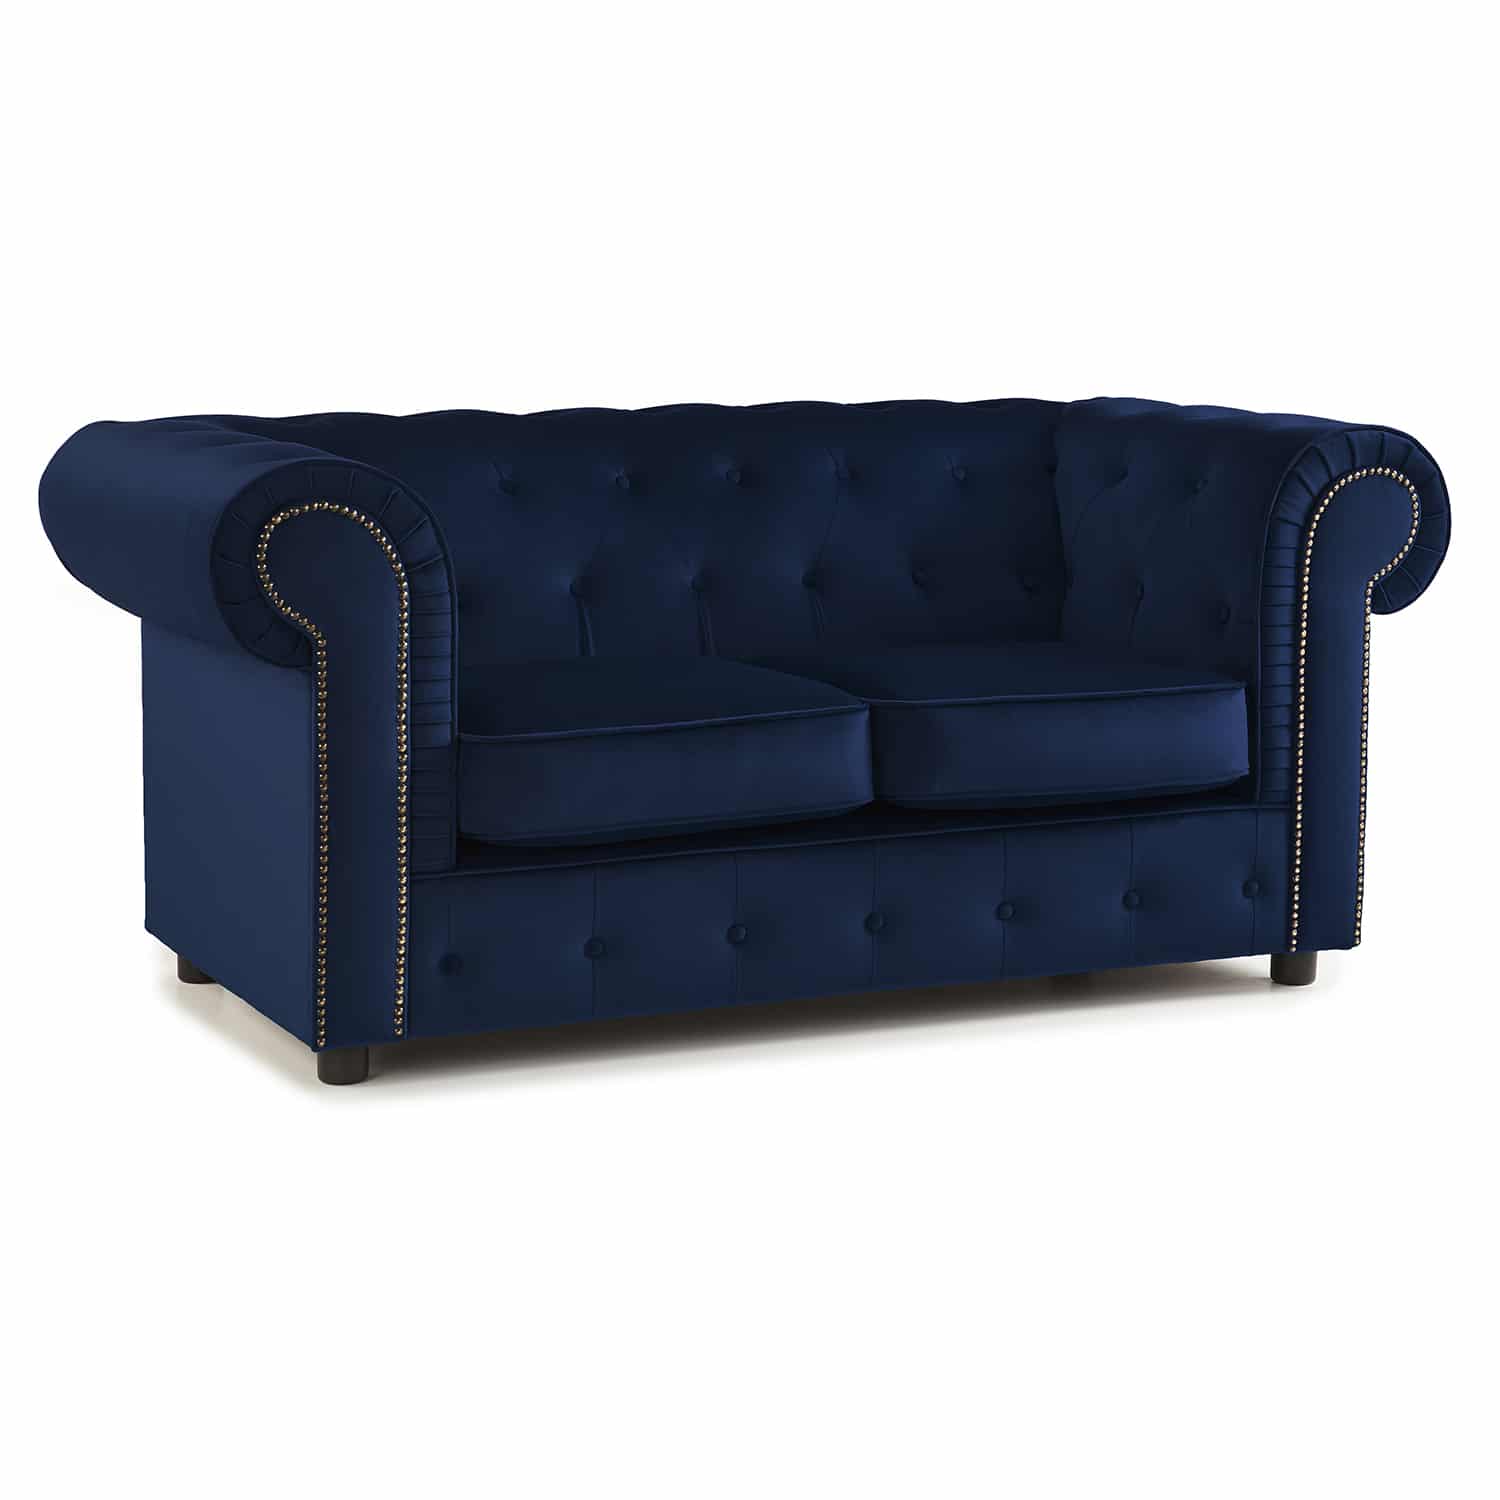 The Ashcroft Soft Velvet Chesterfield 2 Seater Sofa – Indigo